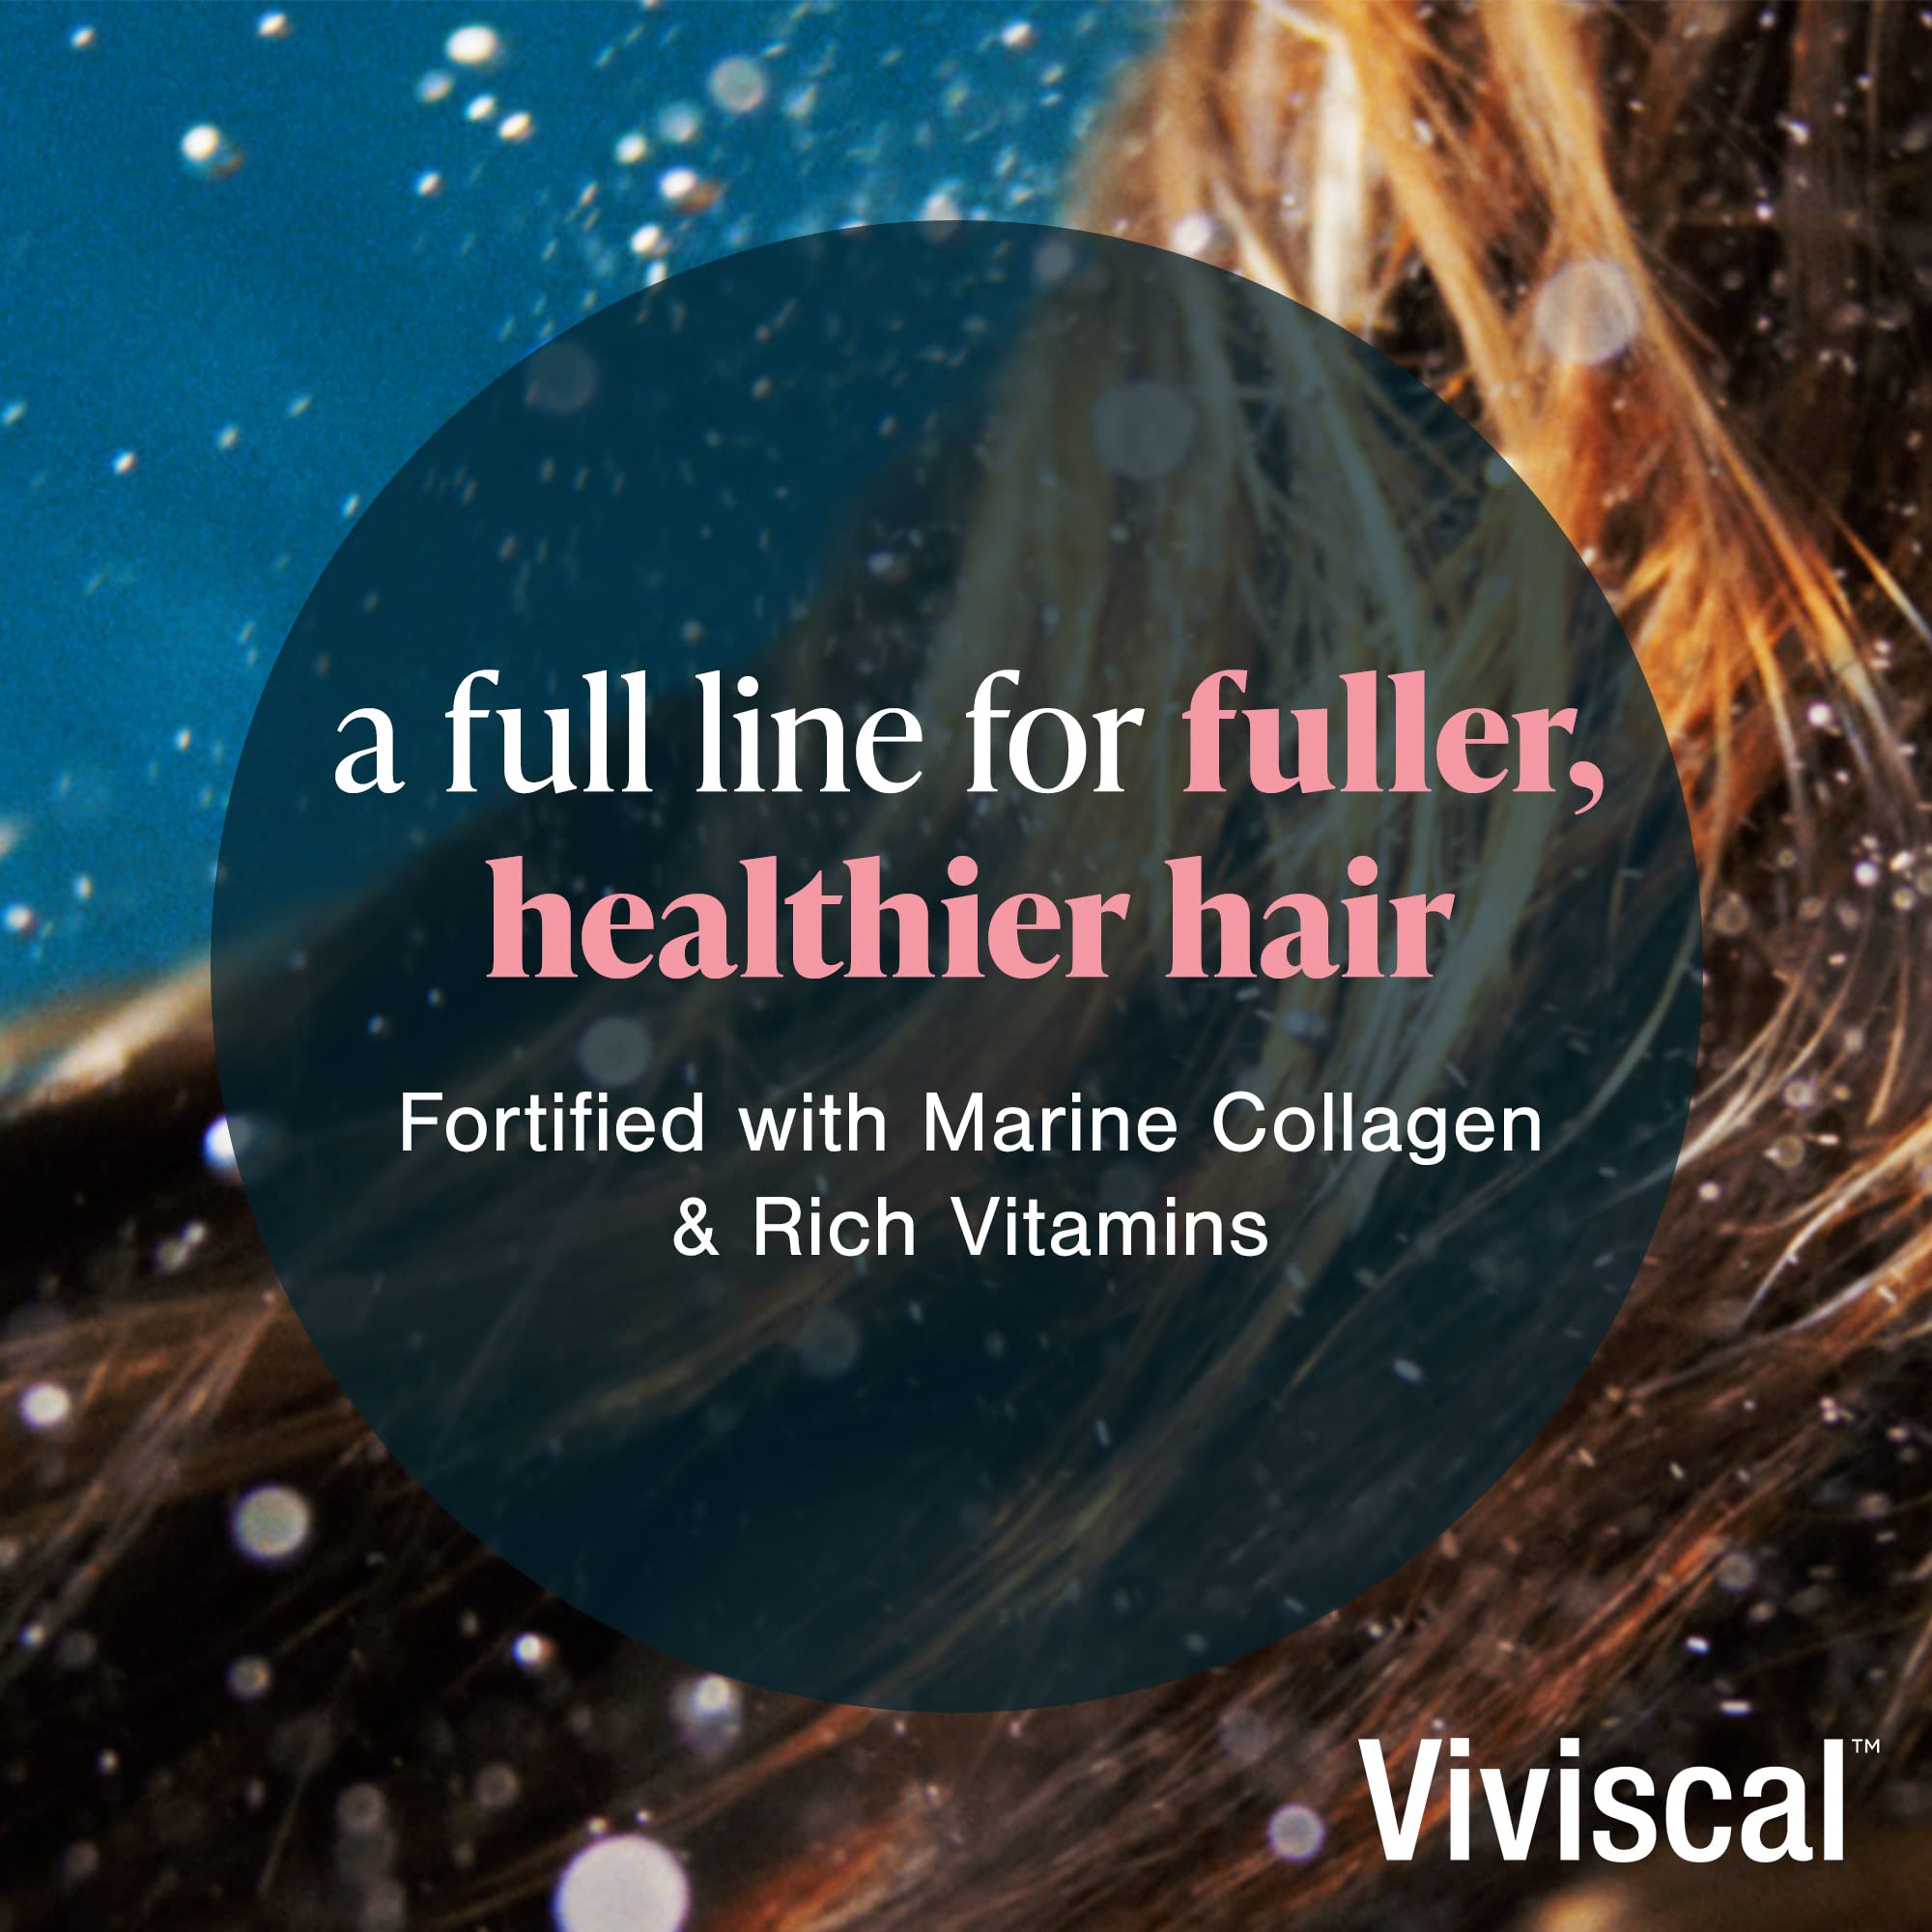 Bundle of Viviscal Hair Thickening Shampoo 250ml (8.45 fl. oz.) + Viviscal Hair Thickening Serum 50ml (1.69 fl. oz.)